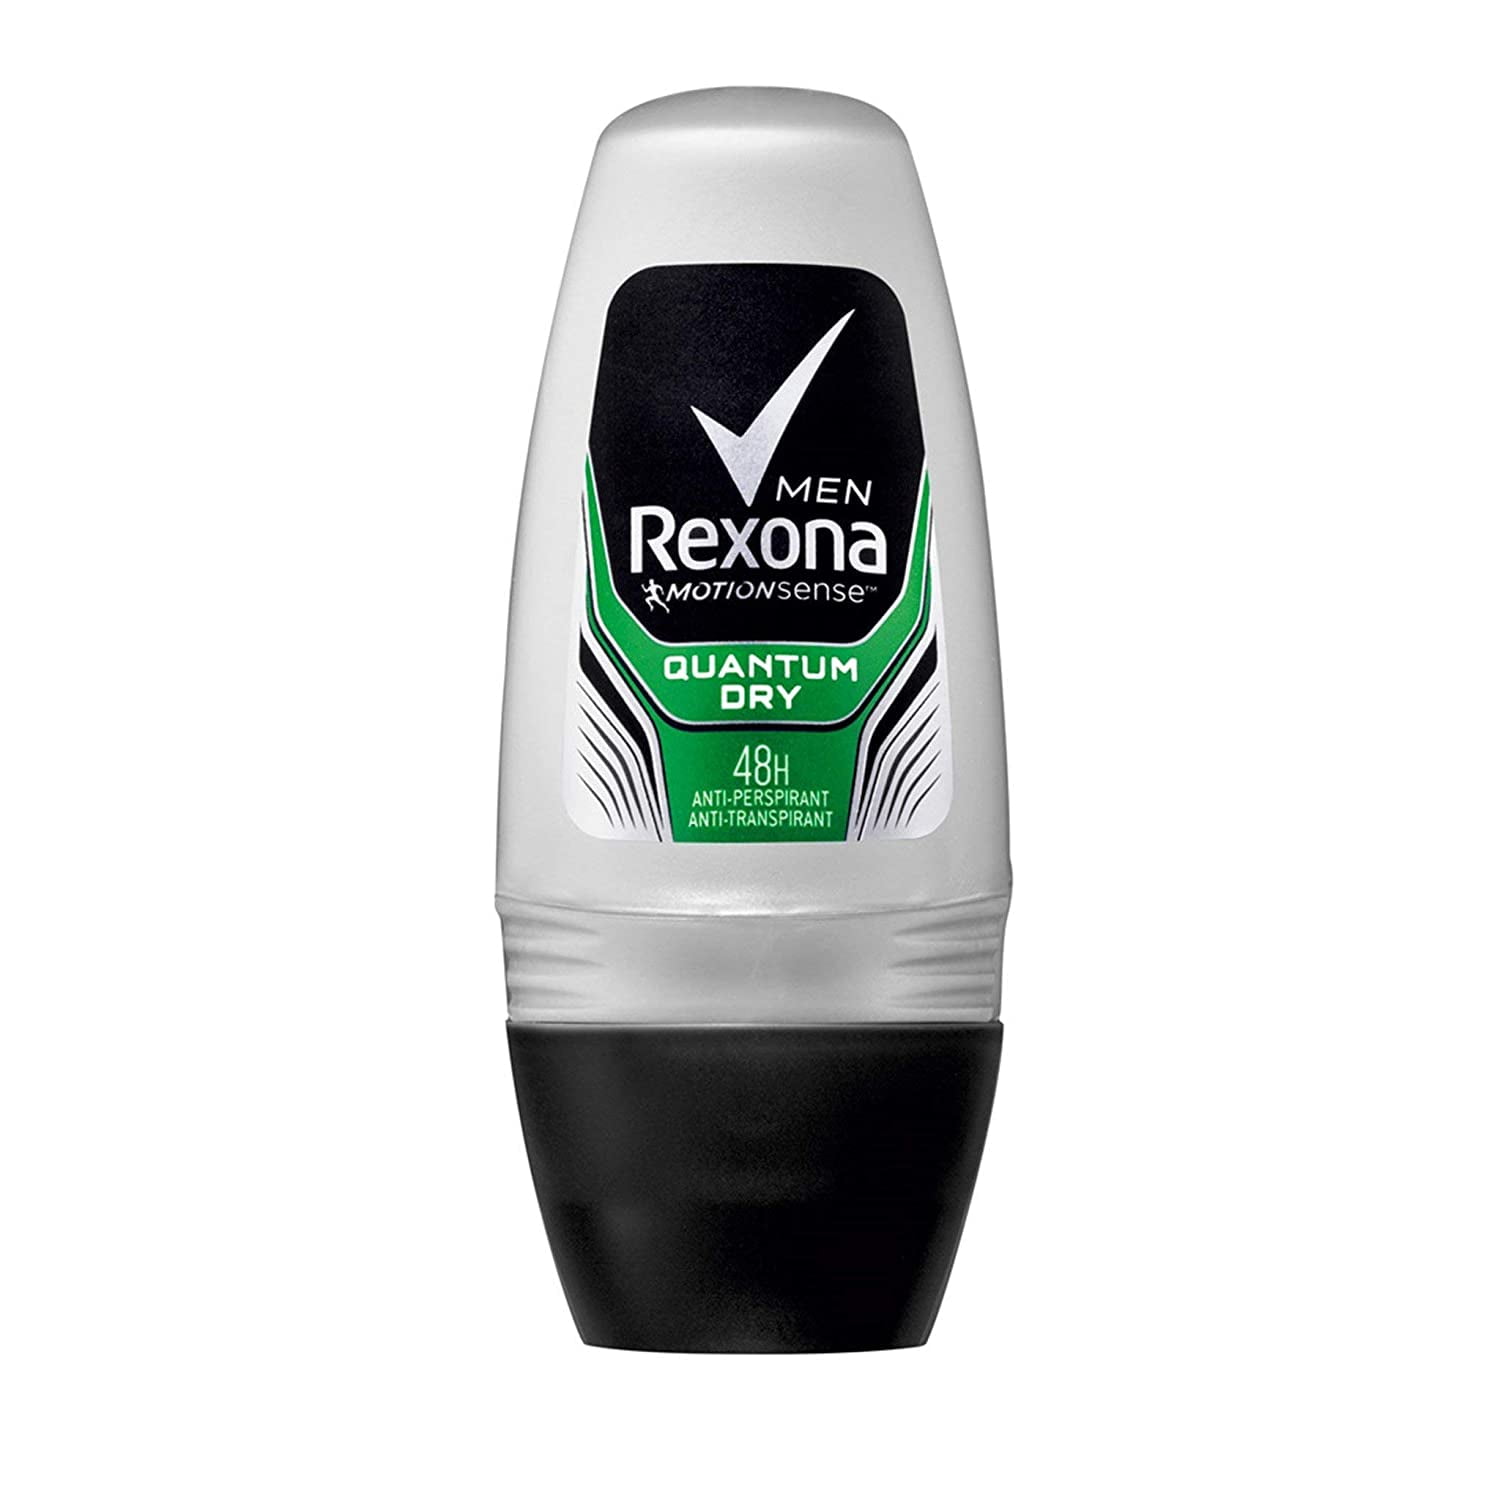 REXONA Men Dry Roll On Deodorant 50ml -Sweat and Odour Control to 48 Hours. Walmart.com